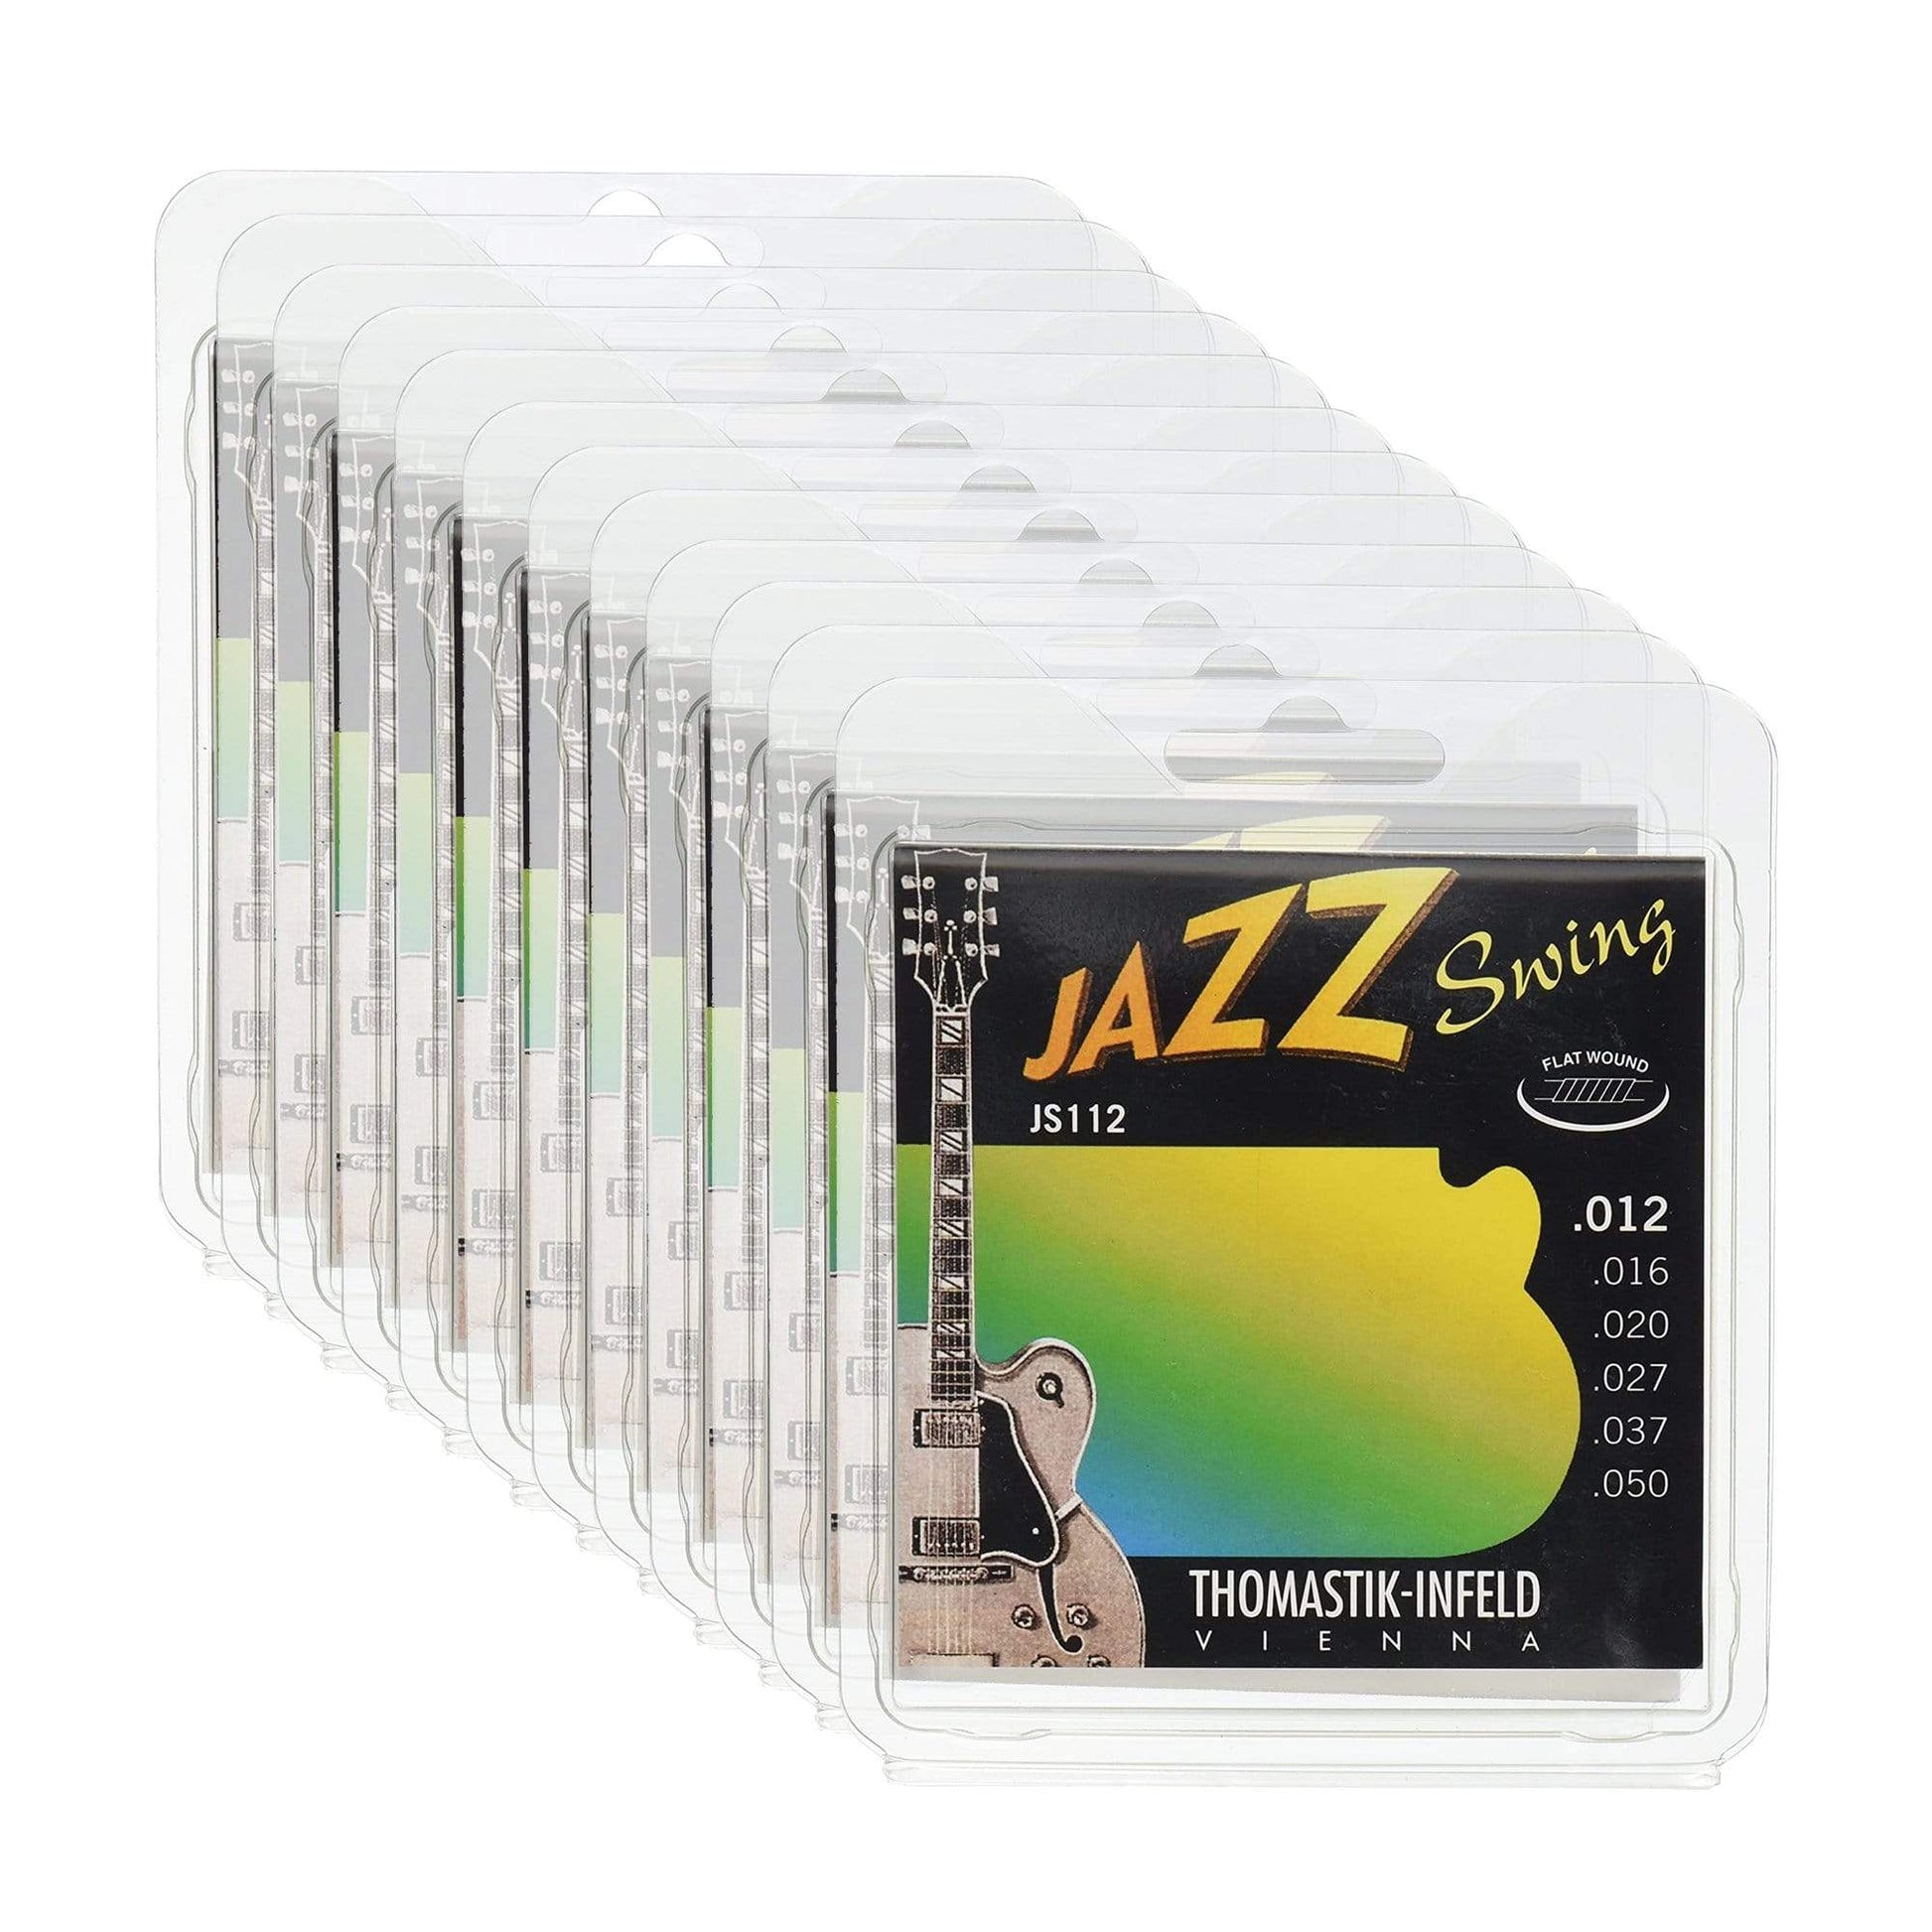 Thomastik JS112 Jazz Swing Flat 12-50 12 Pack Bundle Accessories / Strings / Guitar Strings